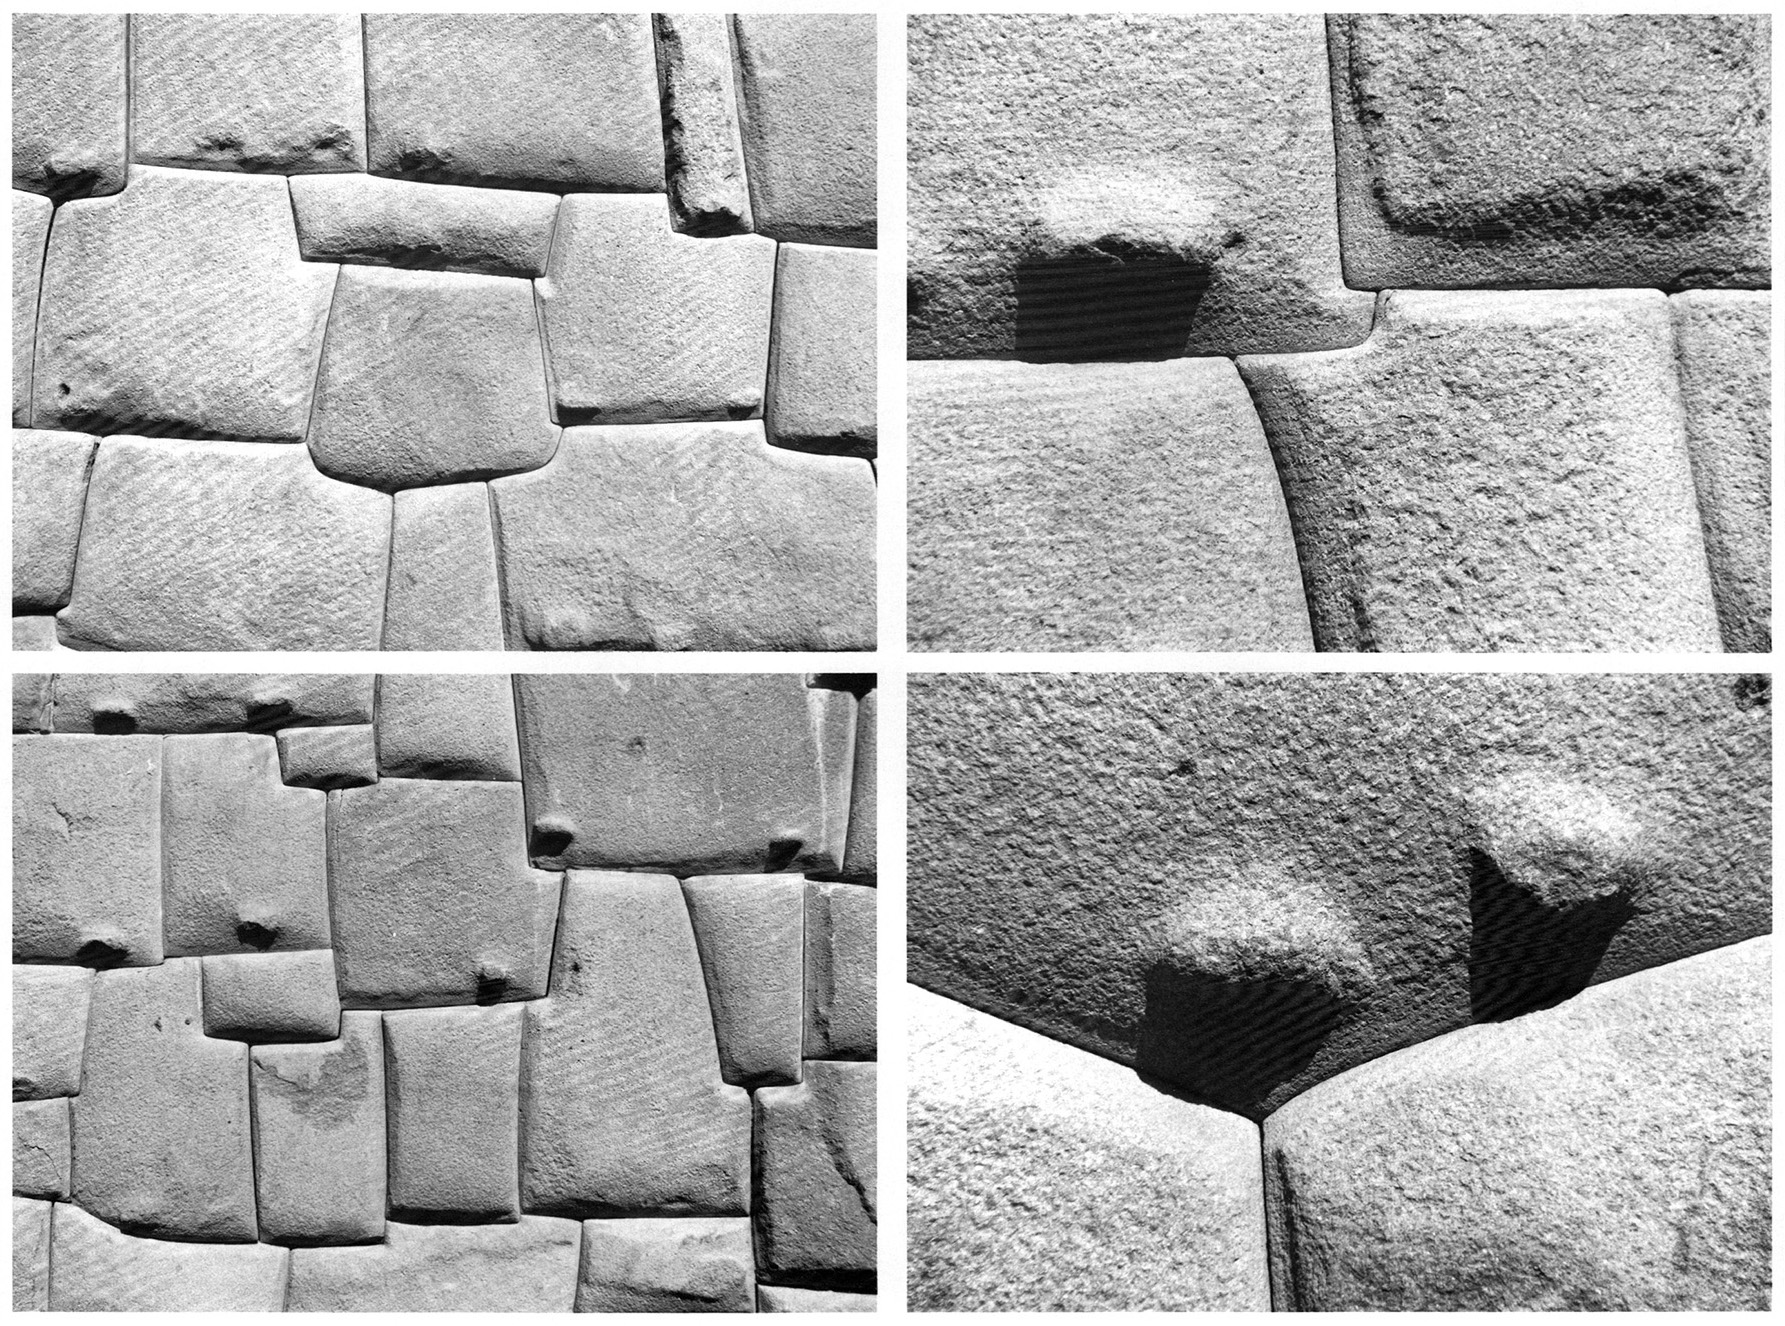 The Stones of Cuzco